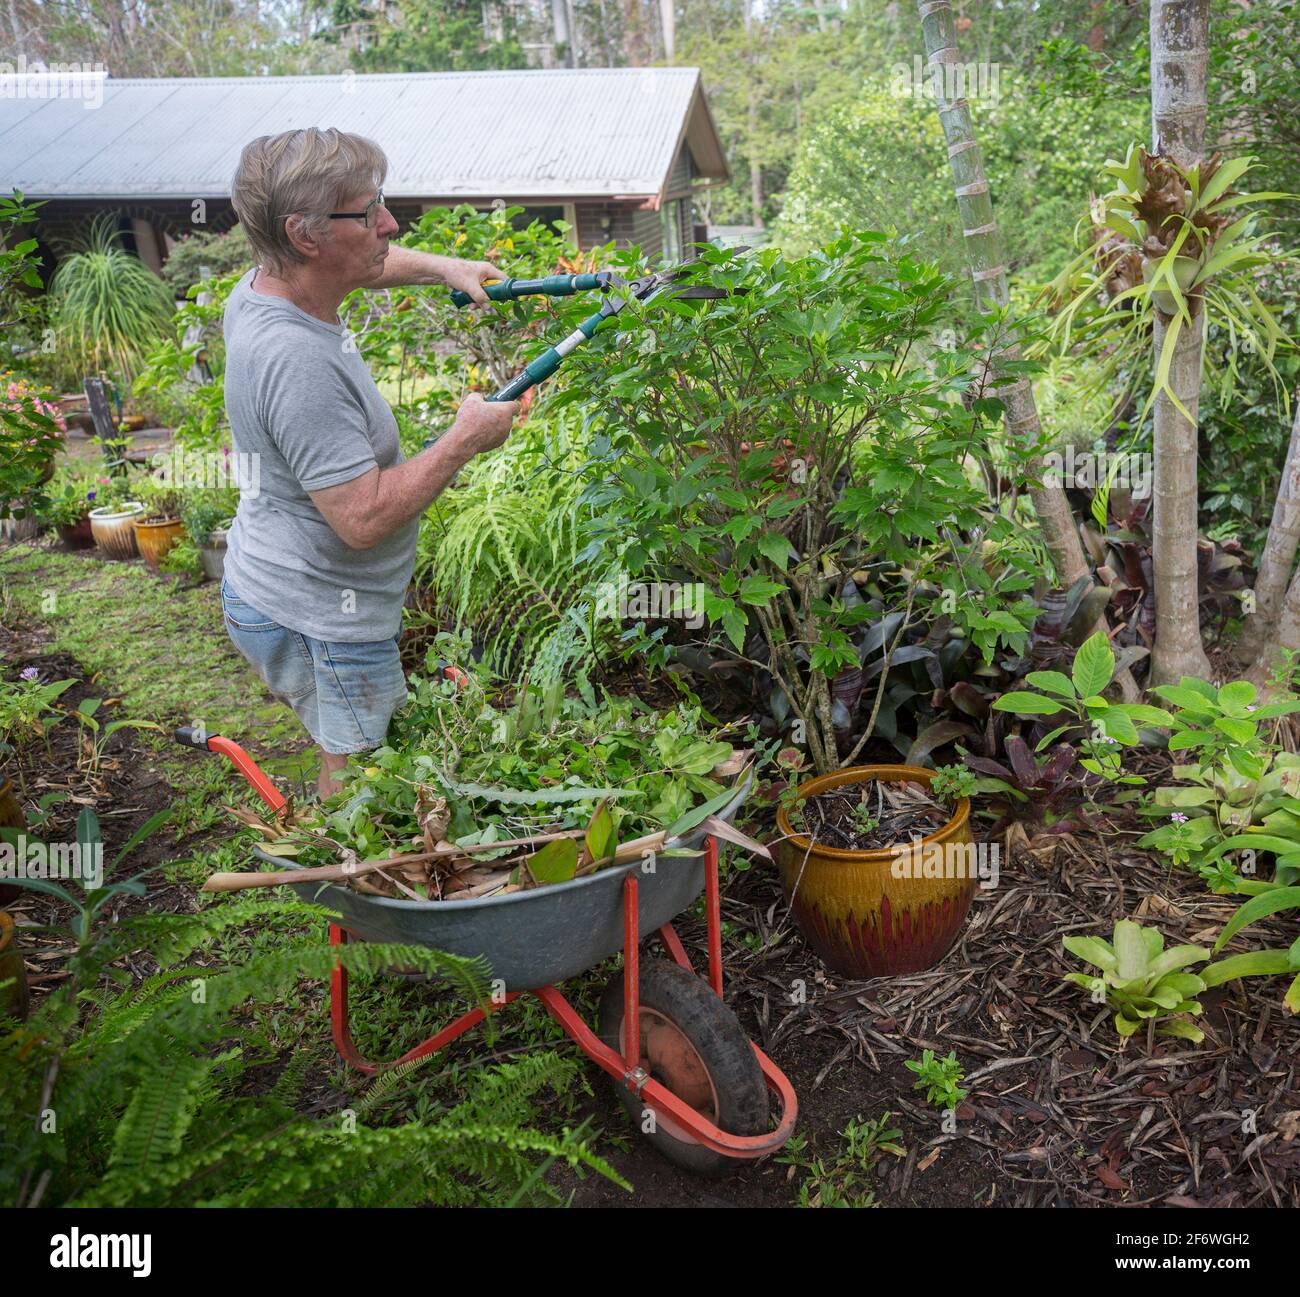 Man, a gardener, using shears to prune shrubs with plant material heaped in nearby wheelbarrow in an Australian garden Stock Photo